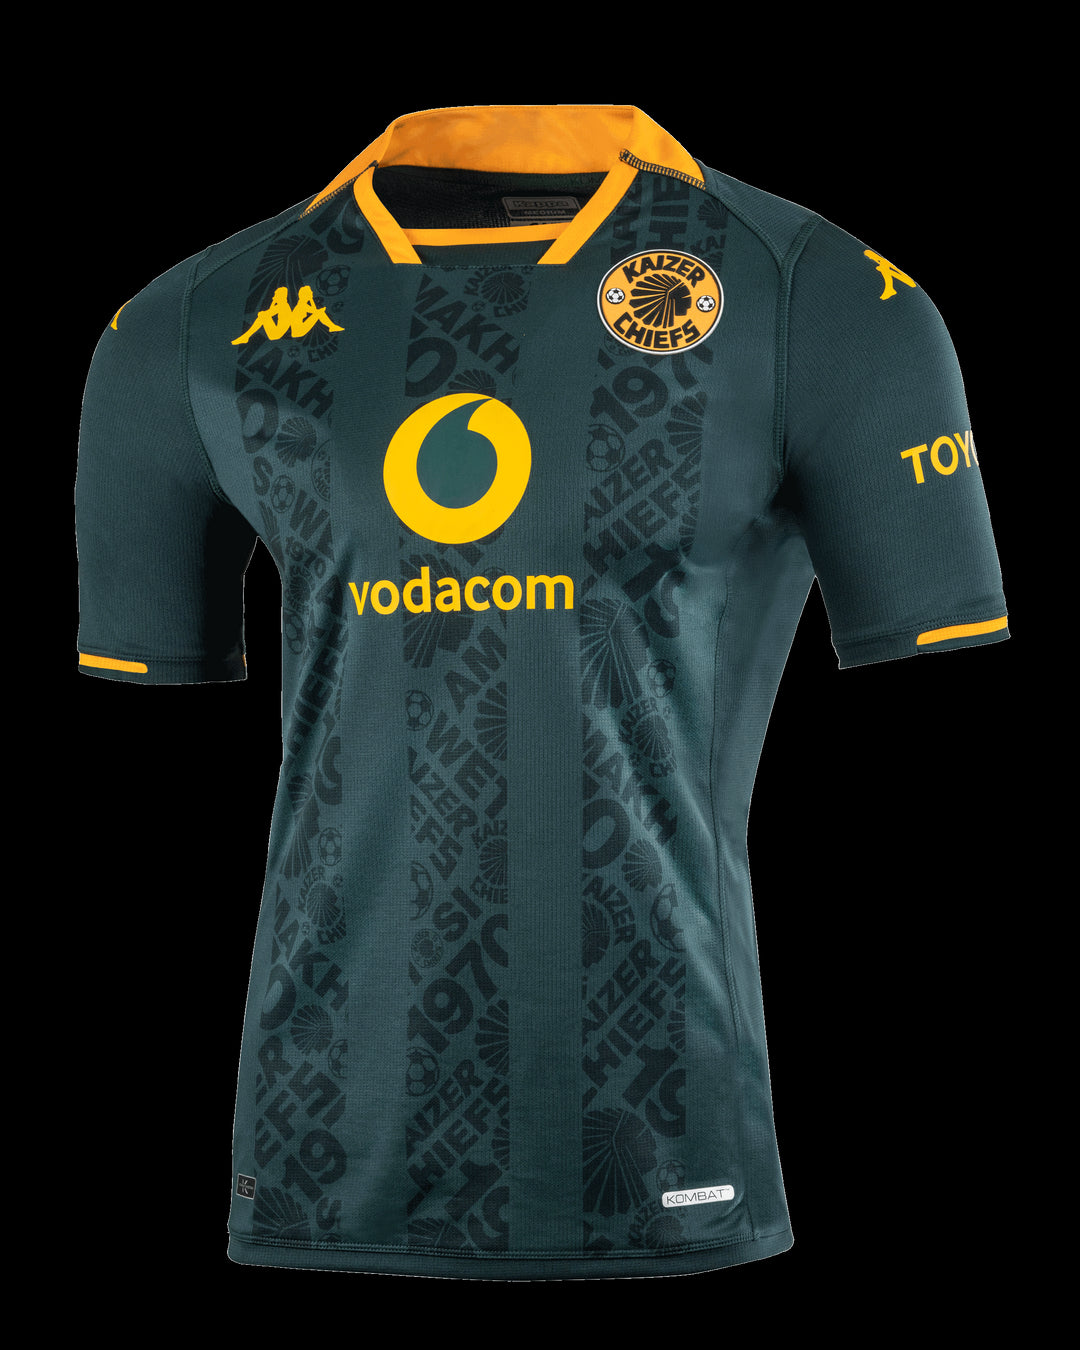 Kaizer Chiefs Away Kit 2015/16- Black KC Alternate Jersey by Nike